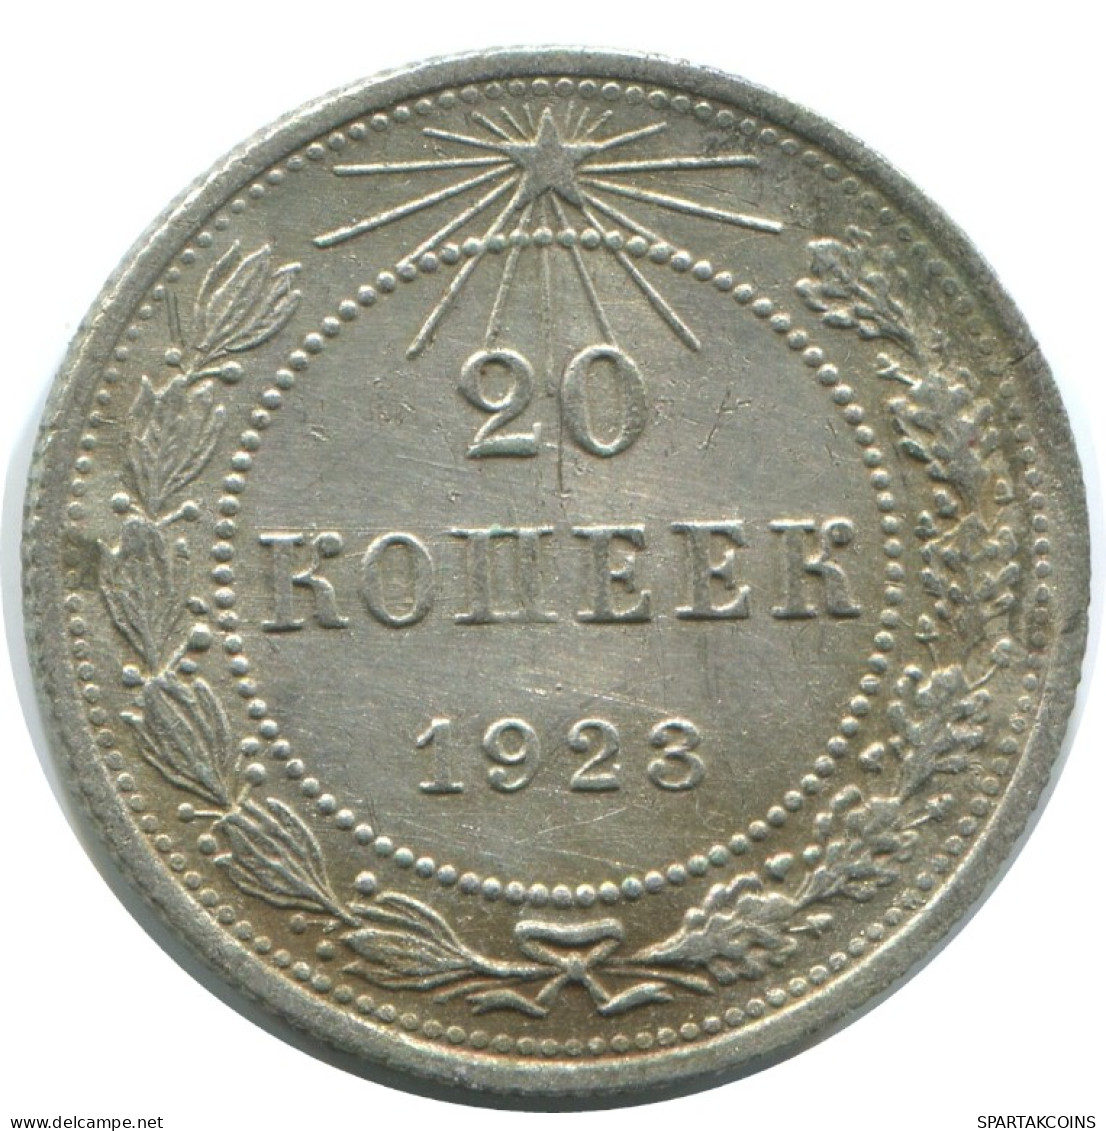 20 KOPEKS 1923 RUSSIA RSFSR SILVER Coin HIGH GRADE #AF581.4.U.A - Russia